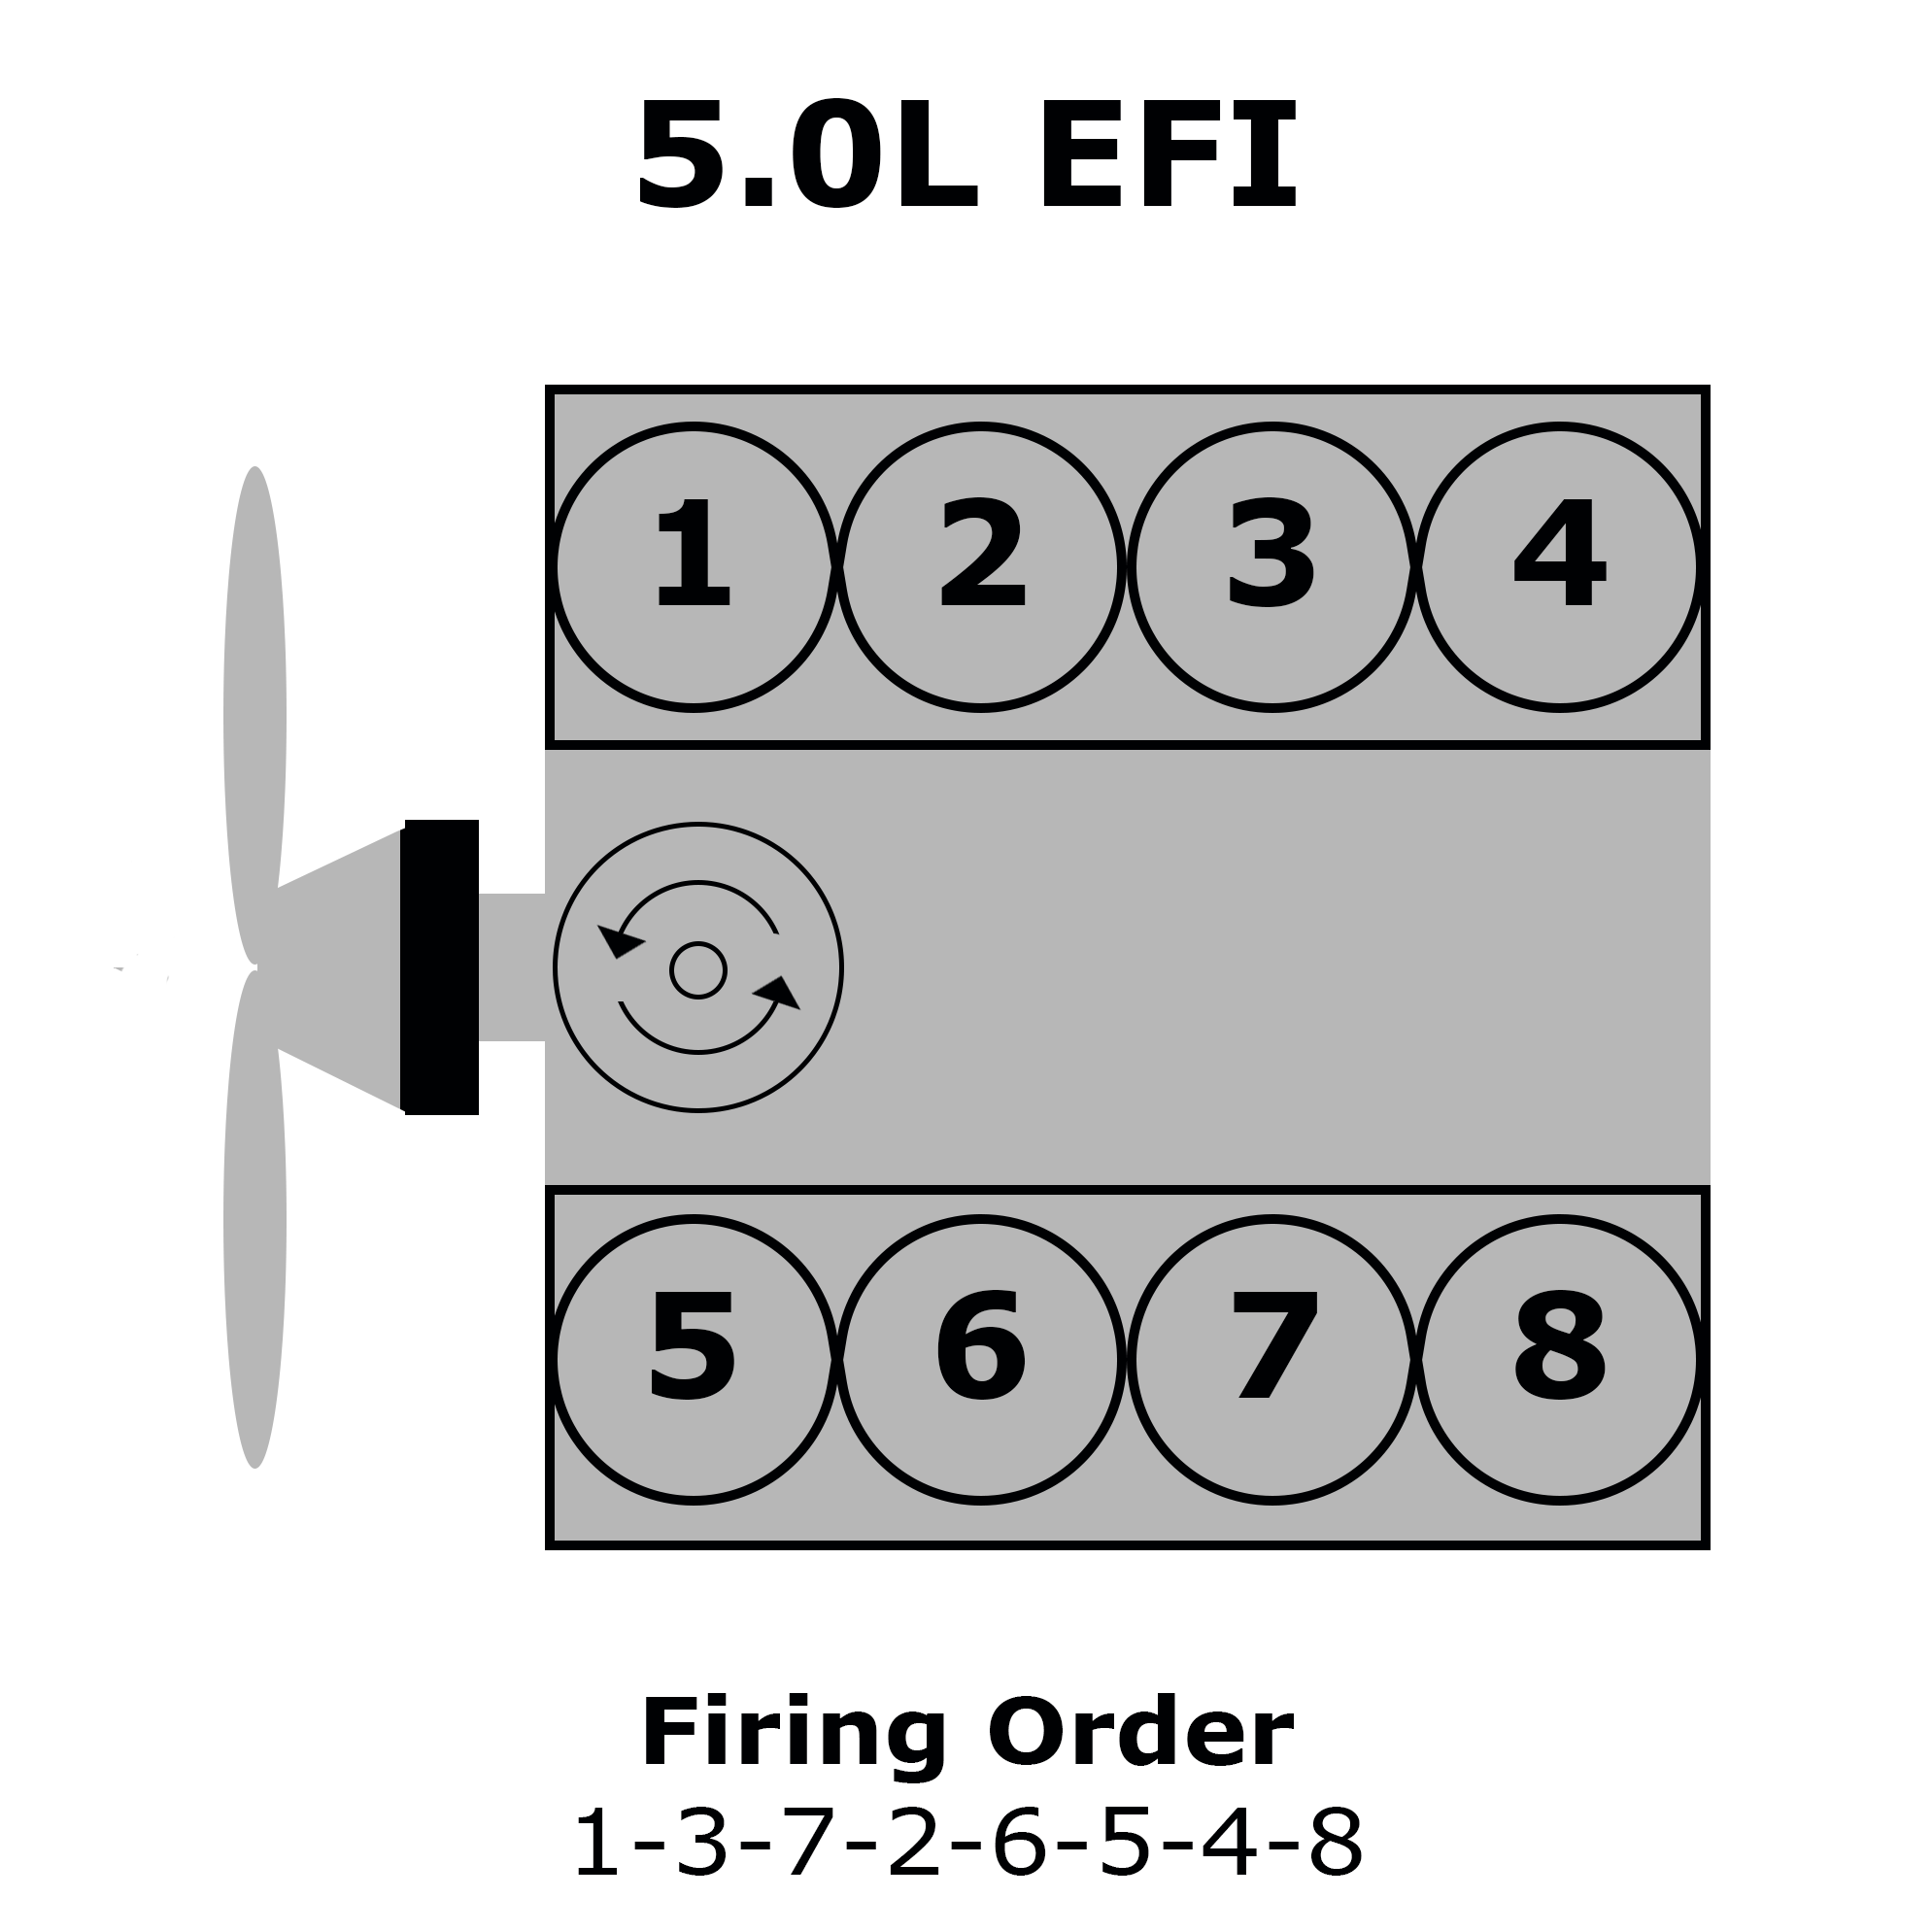 Ford 5.0L EFI Cylinder Numbering, Distributor Rotation, and Firing Order